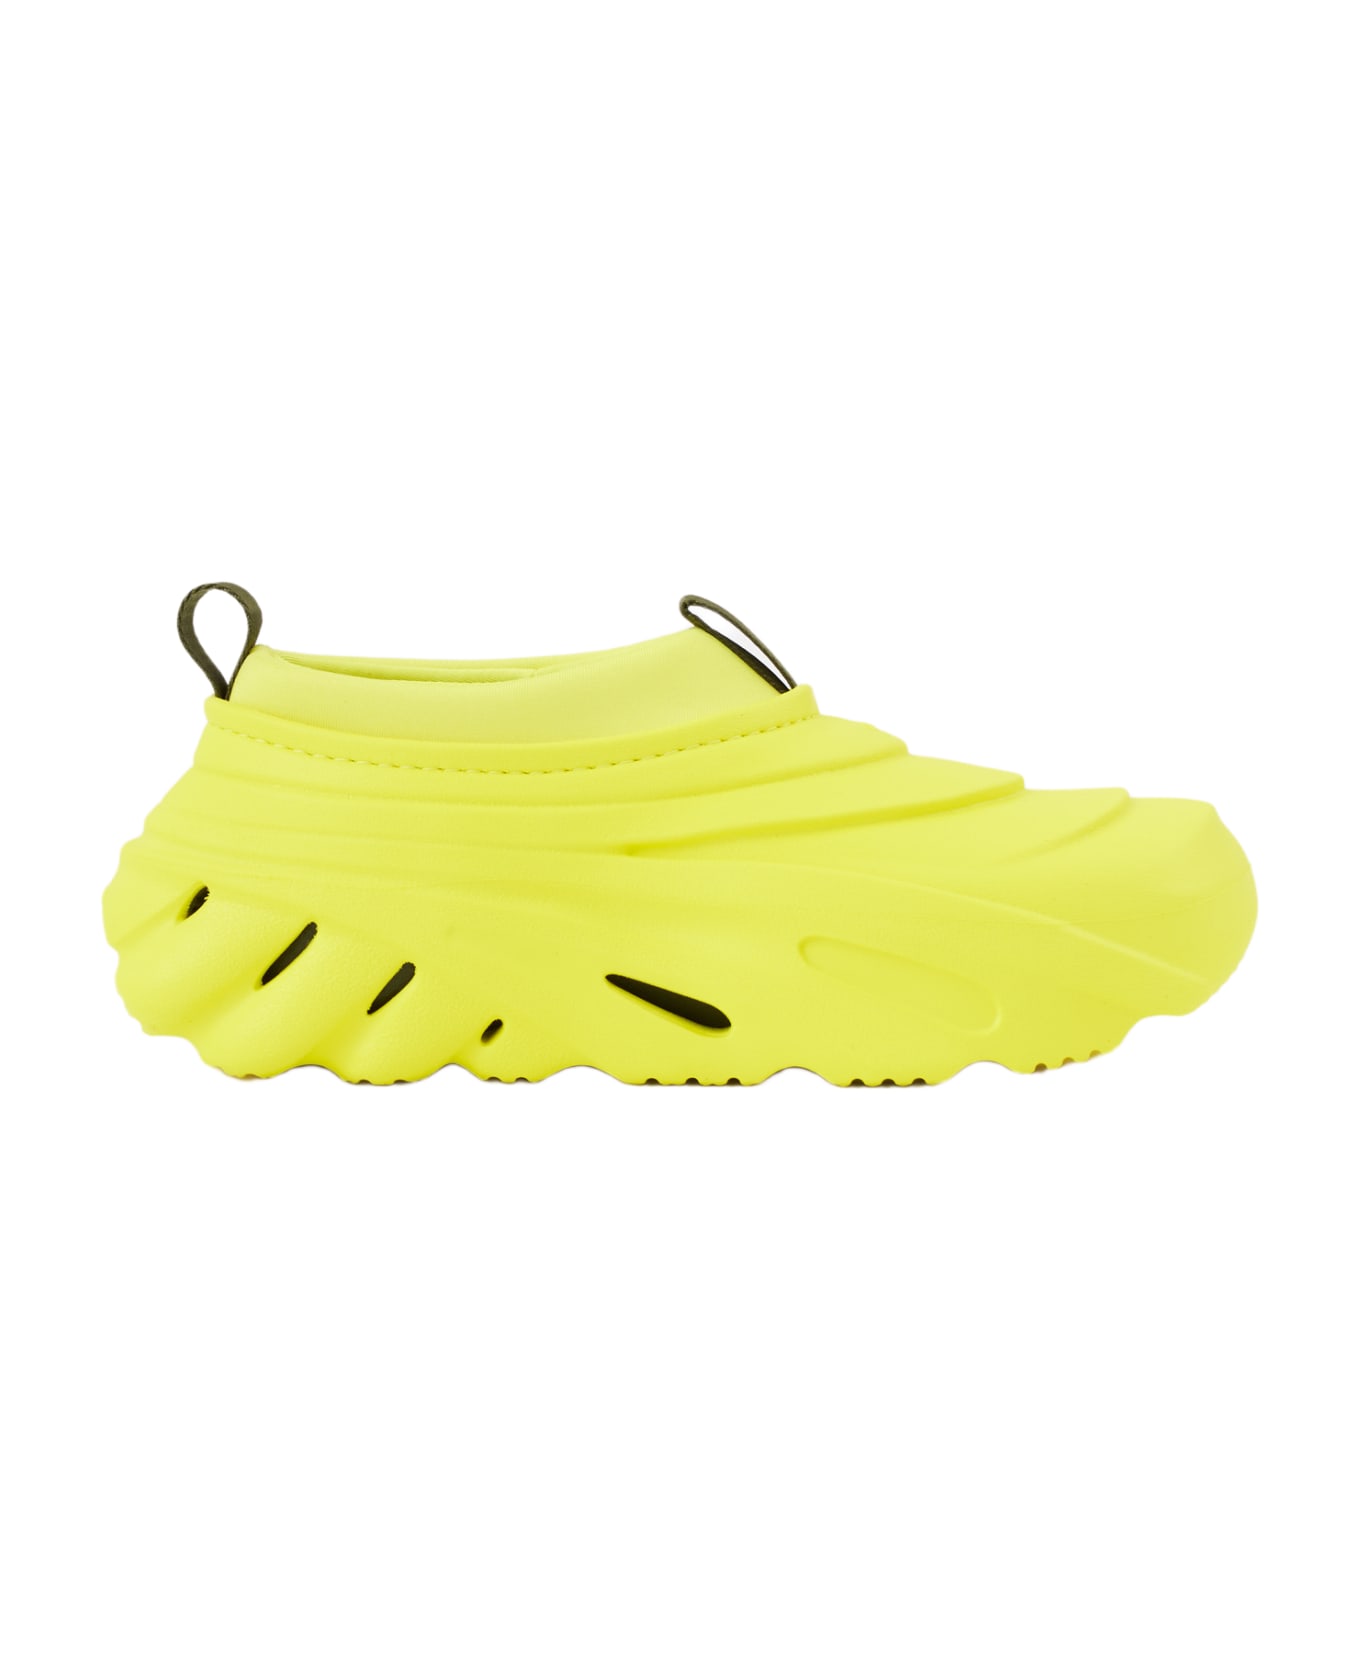 Crocs Echo Storm Shoes - yellow スニーカー